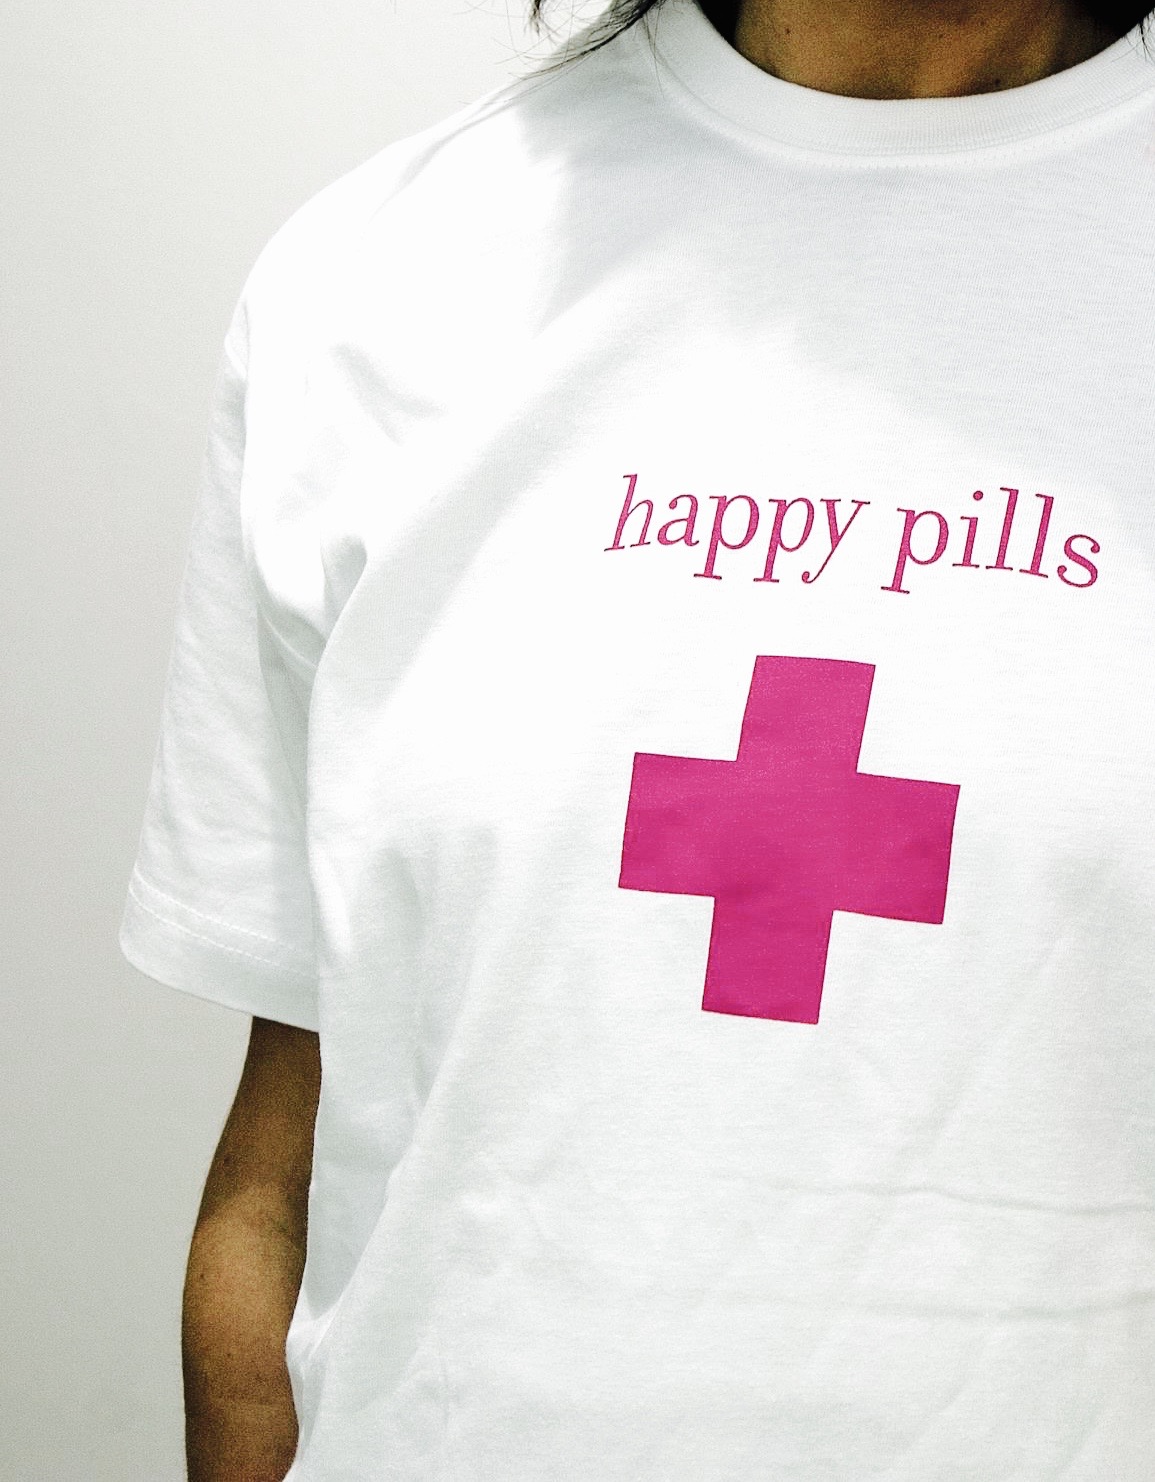 happy pills 02.jpg